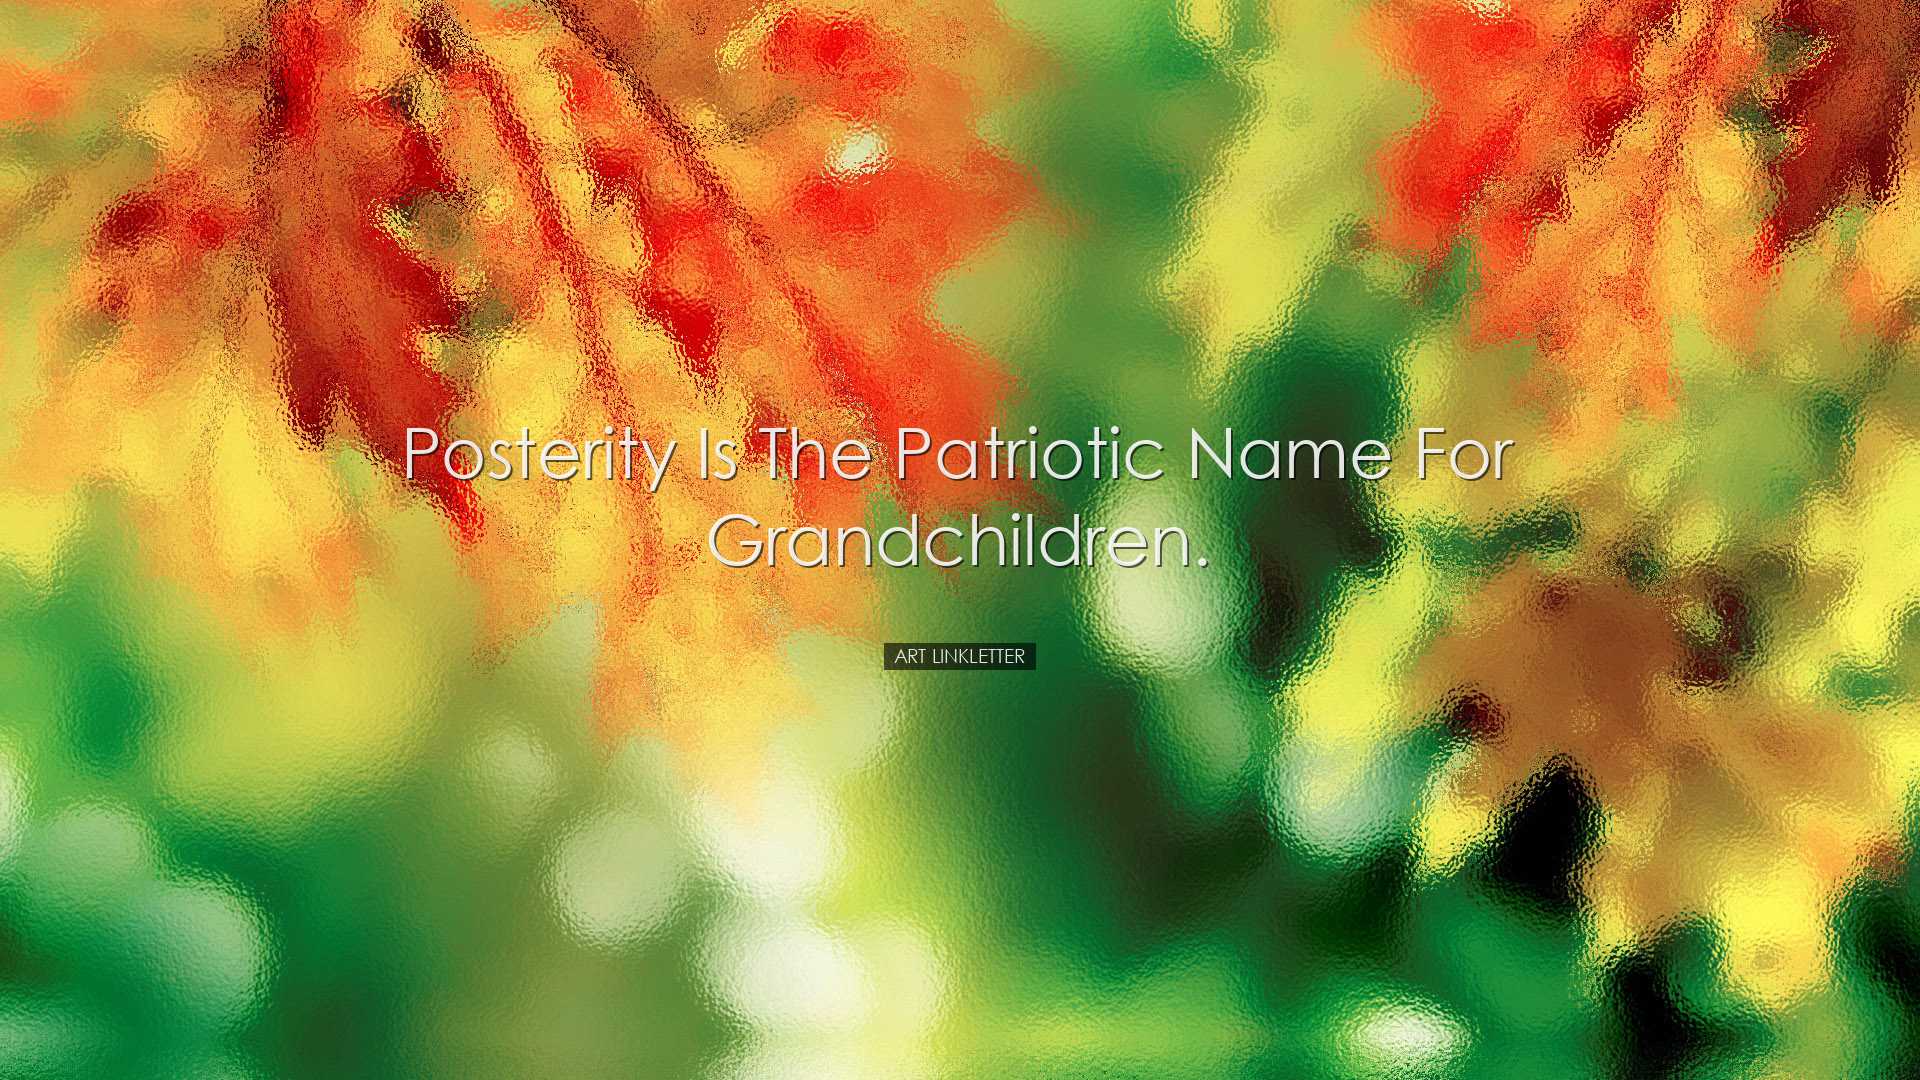 Posterity is the patriotic name for grandchildren. - Art Linklette